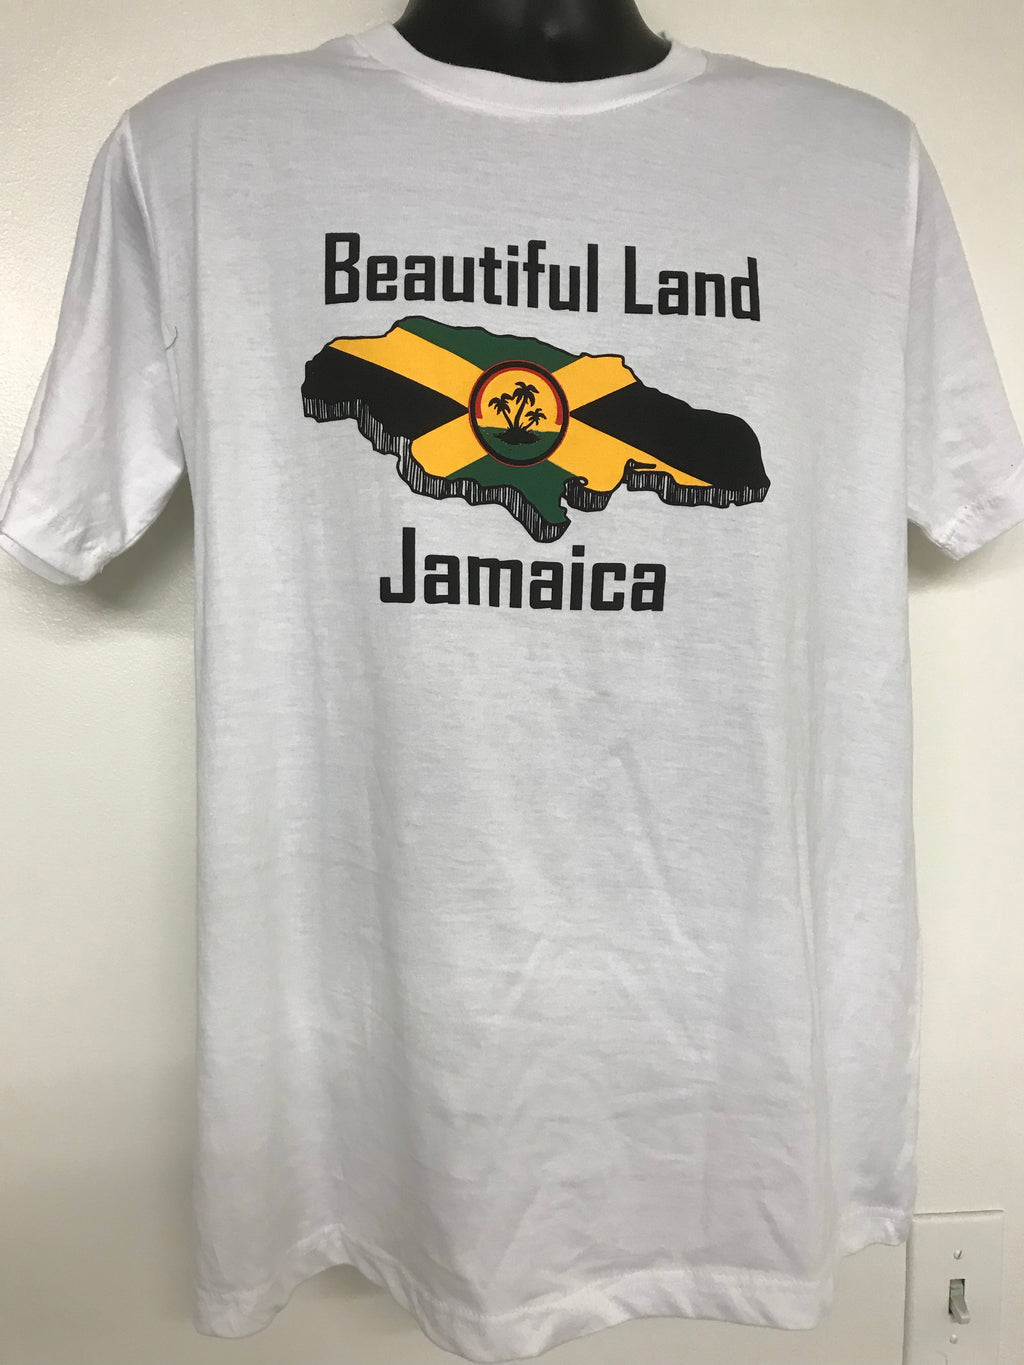 Jamaican men’s T-shirt. Beautiful land Jamaica. (Wholesale)